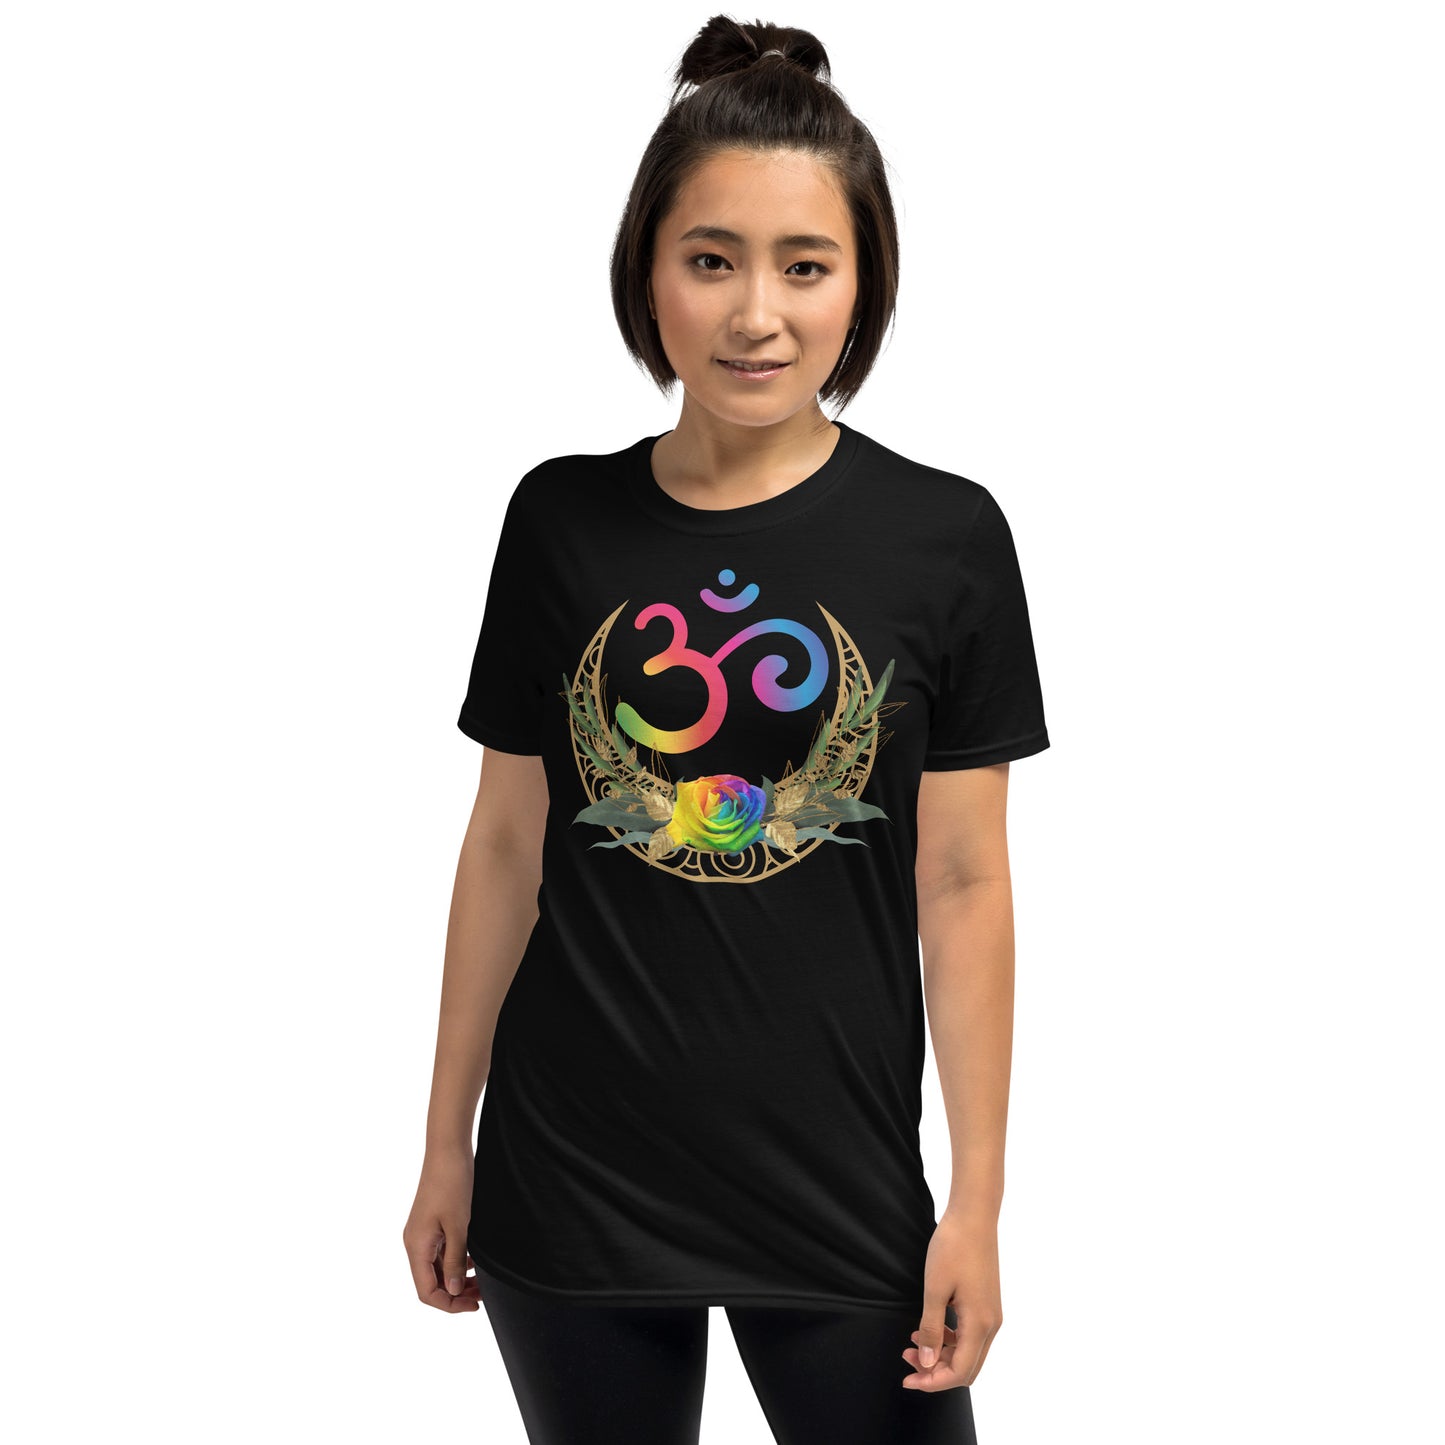 Graphic Print Tee - Ohm Rainbow Crescent Moon Rose - Short-Sleeve Unisex Classic Black Tee T-Shirt